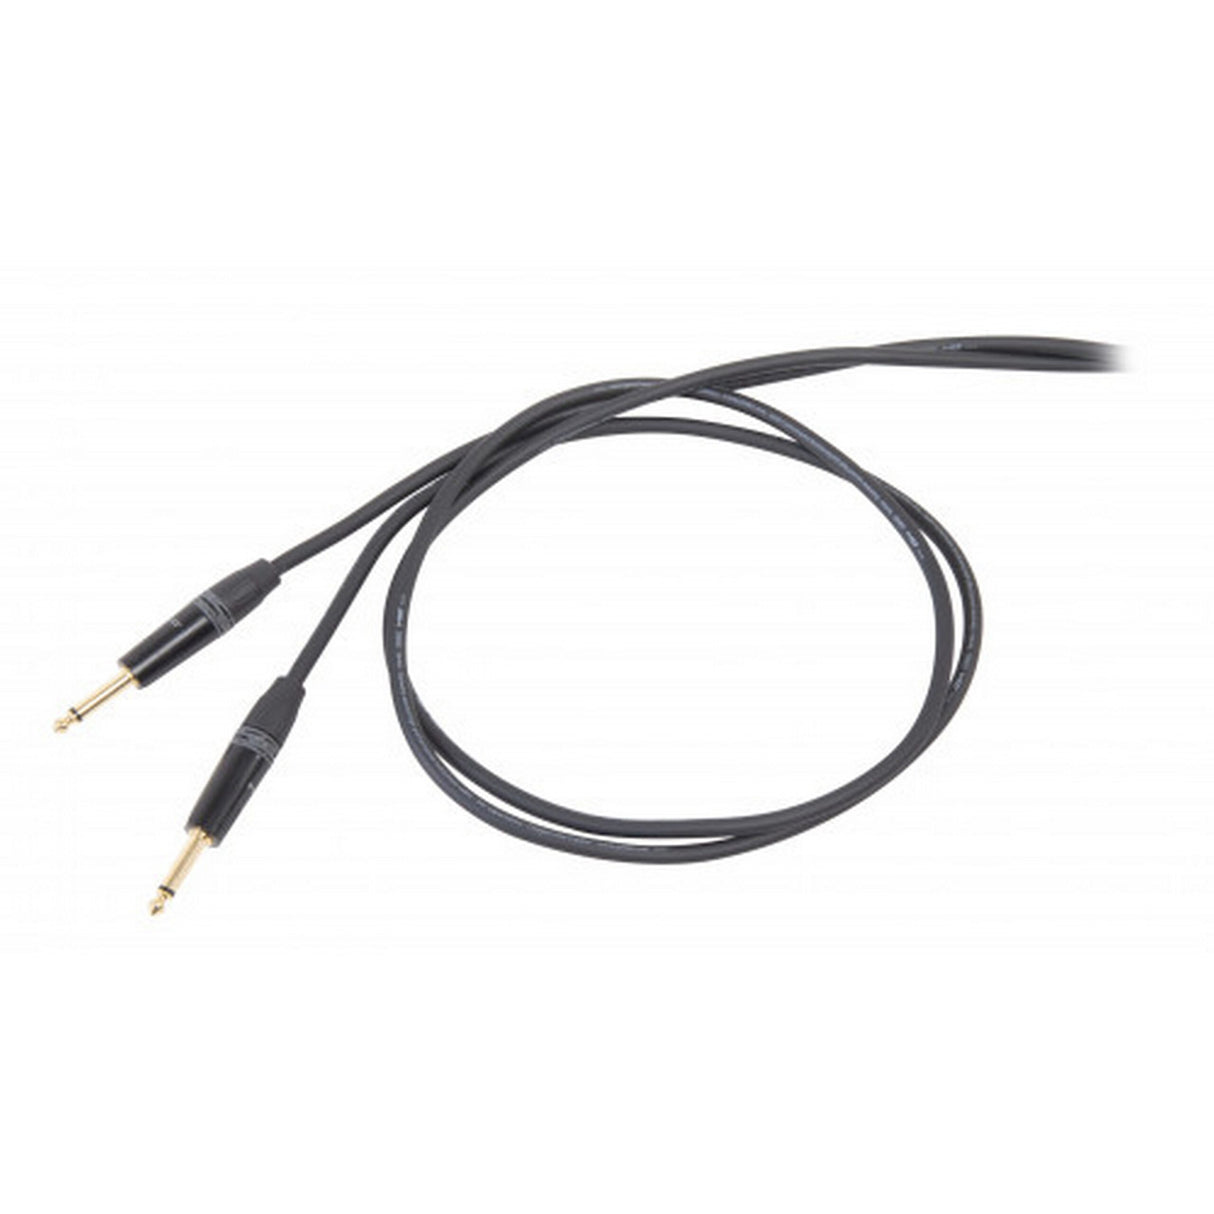 DieHard DHS100LU5 ONEHERO Professional Instrument Cable, 5 m